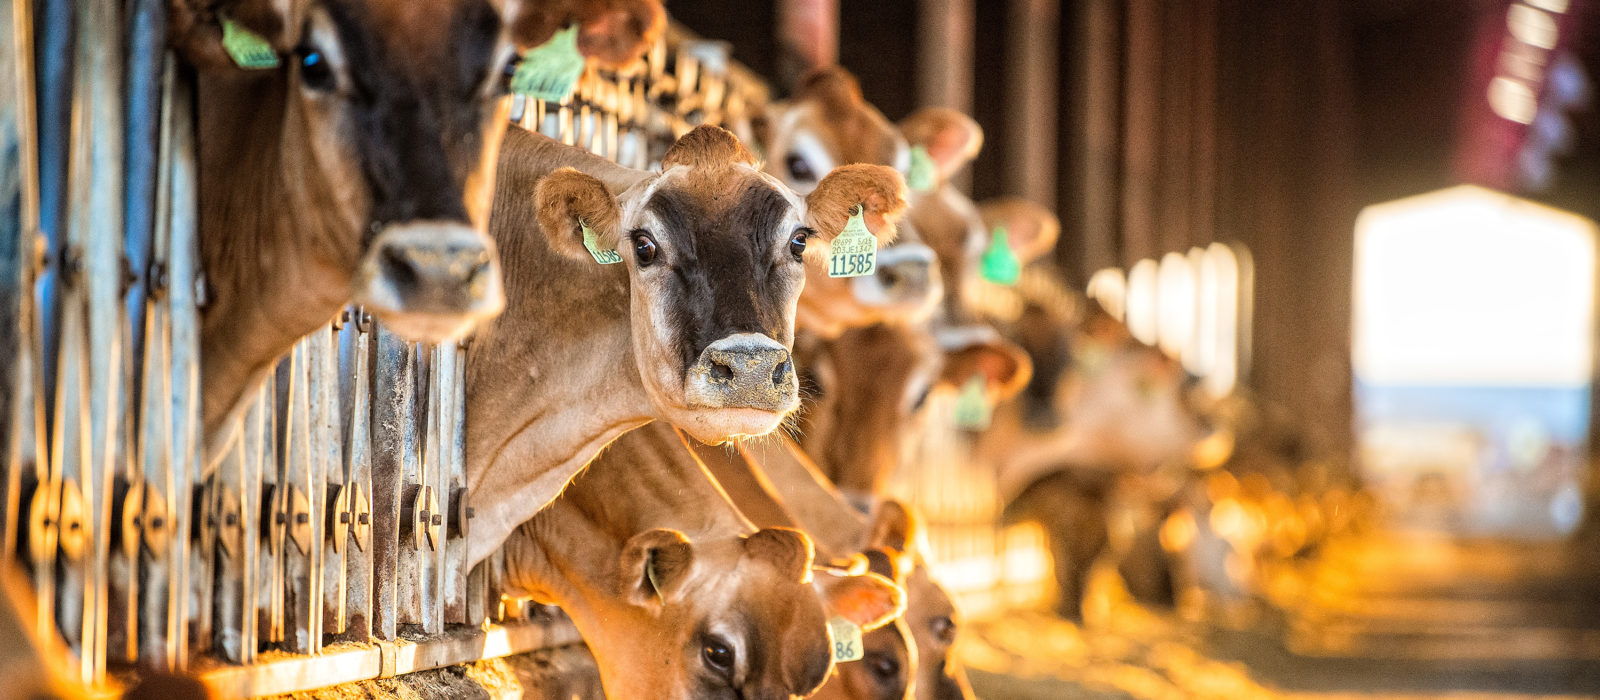 Dairy cows in barn eating